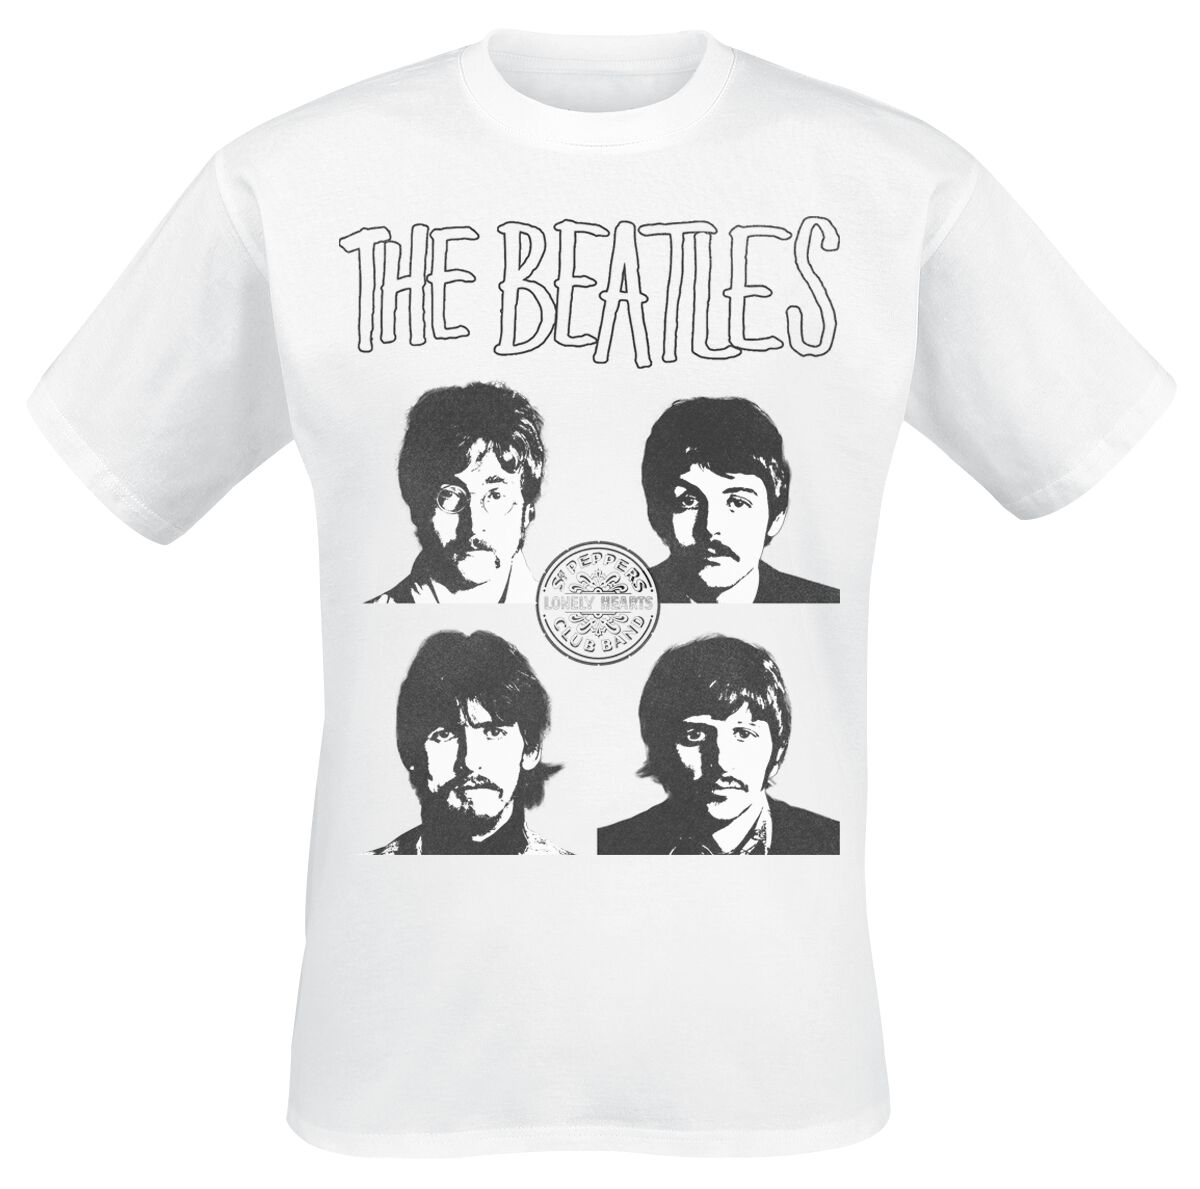 The Beatles T-Shirt - Sgt. Peppers Portrais - S bis 3XL - für Männer - Größe 3XL - weiß  - Lizenziertes Merchandise!